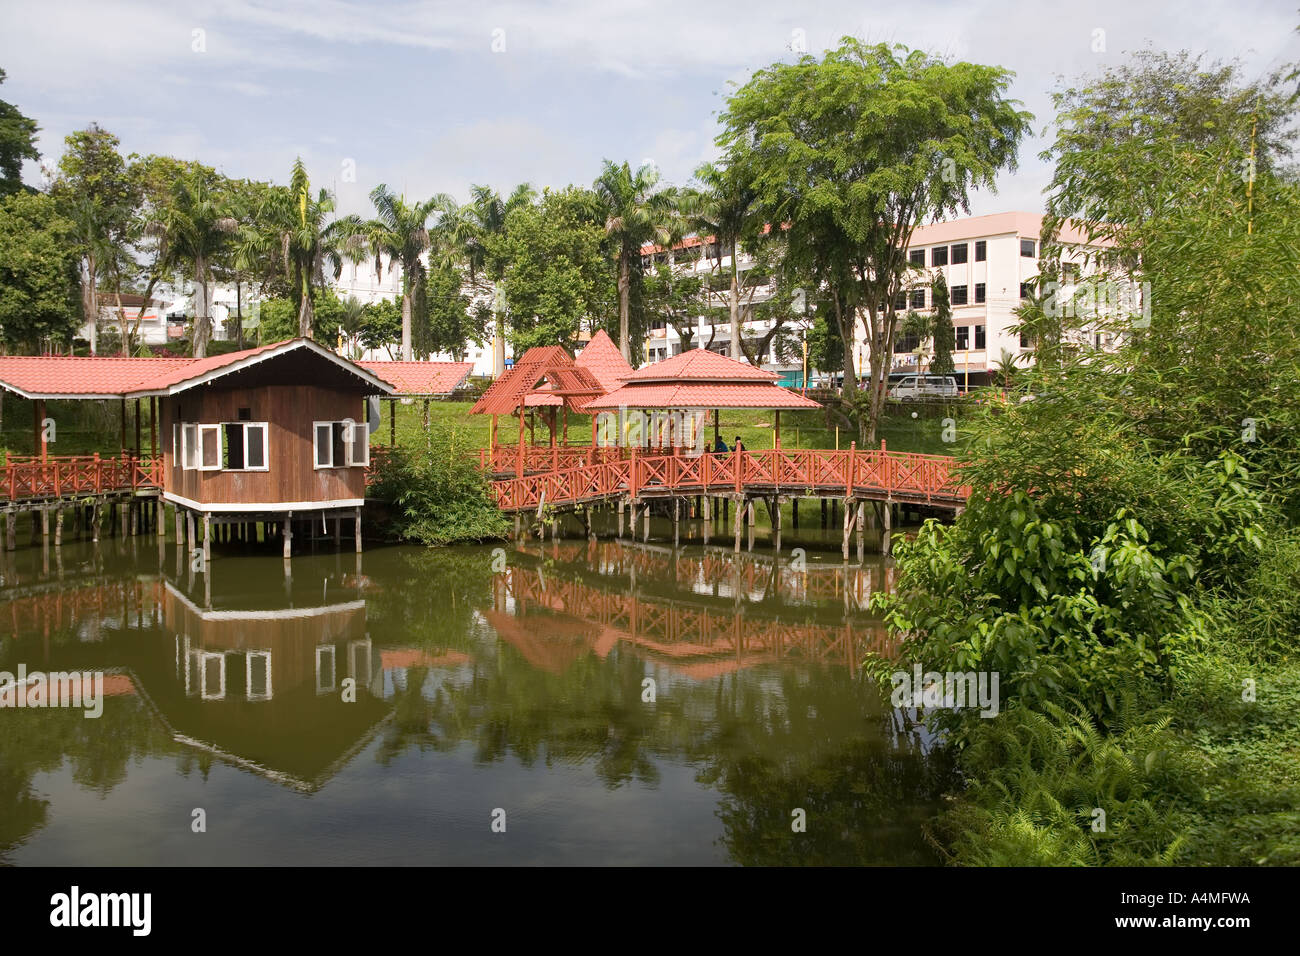 Malaysia Sarawak Kapit civic centre lake and gazebos Stock Photo